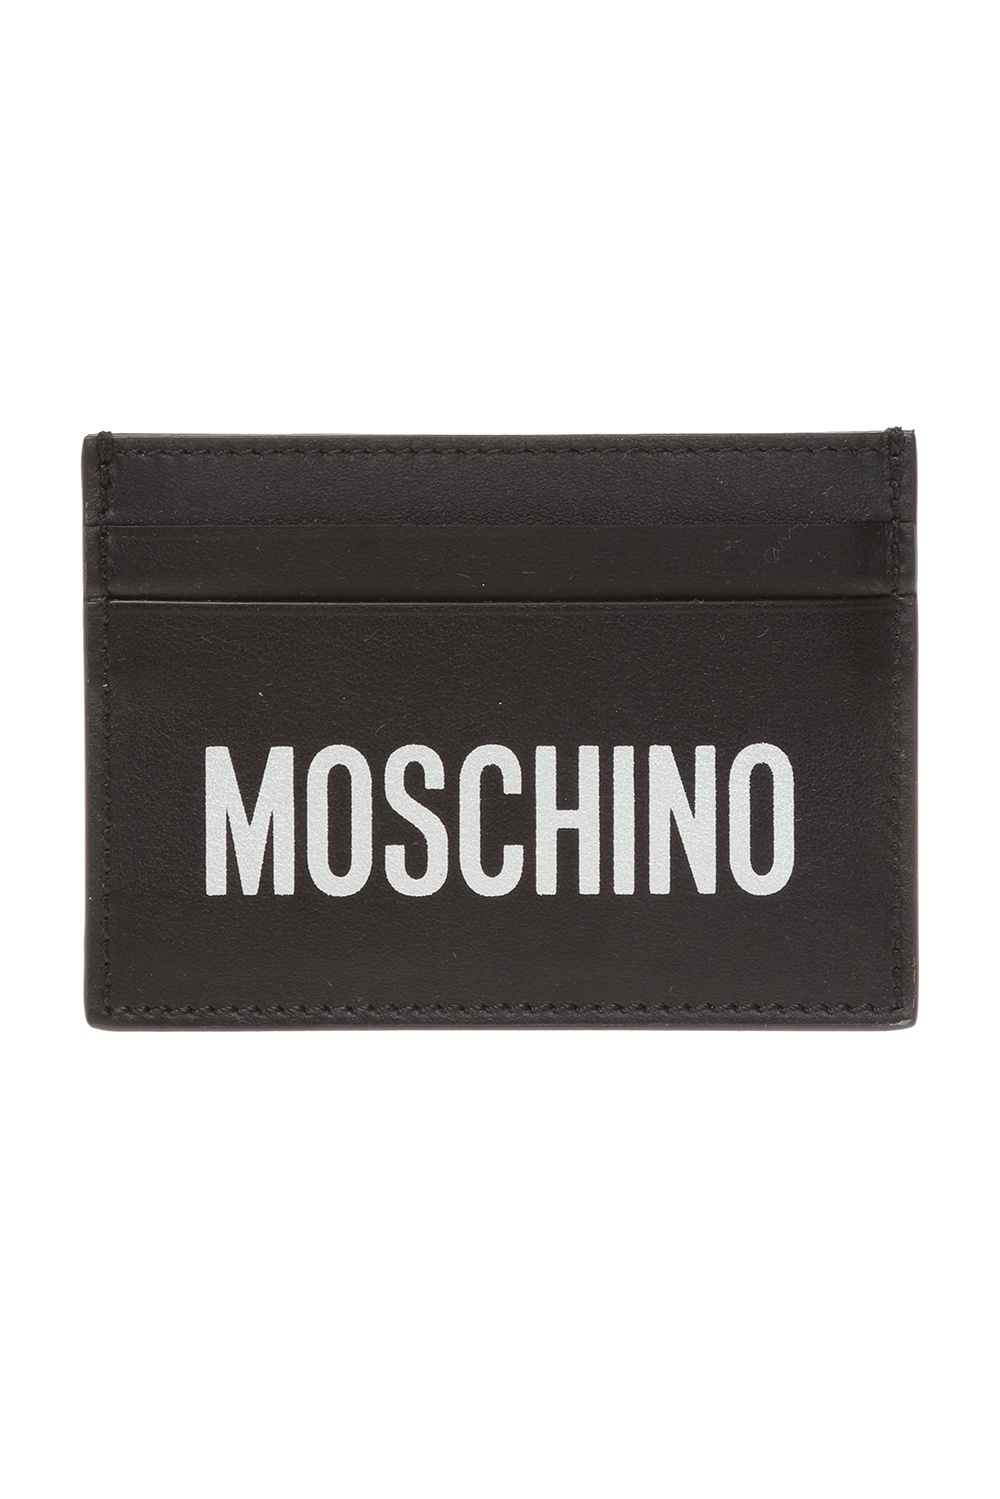 Moschino Card holder